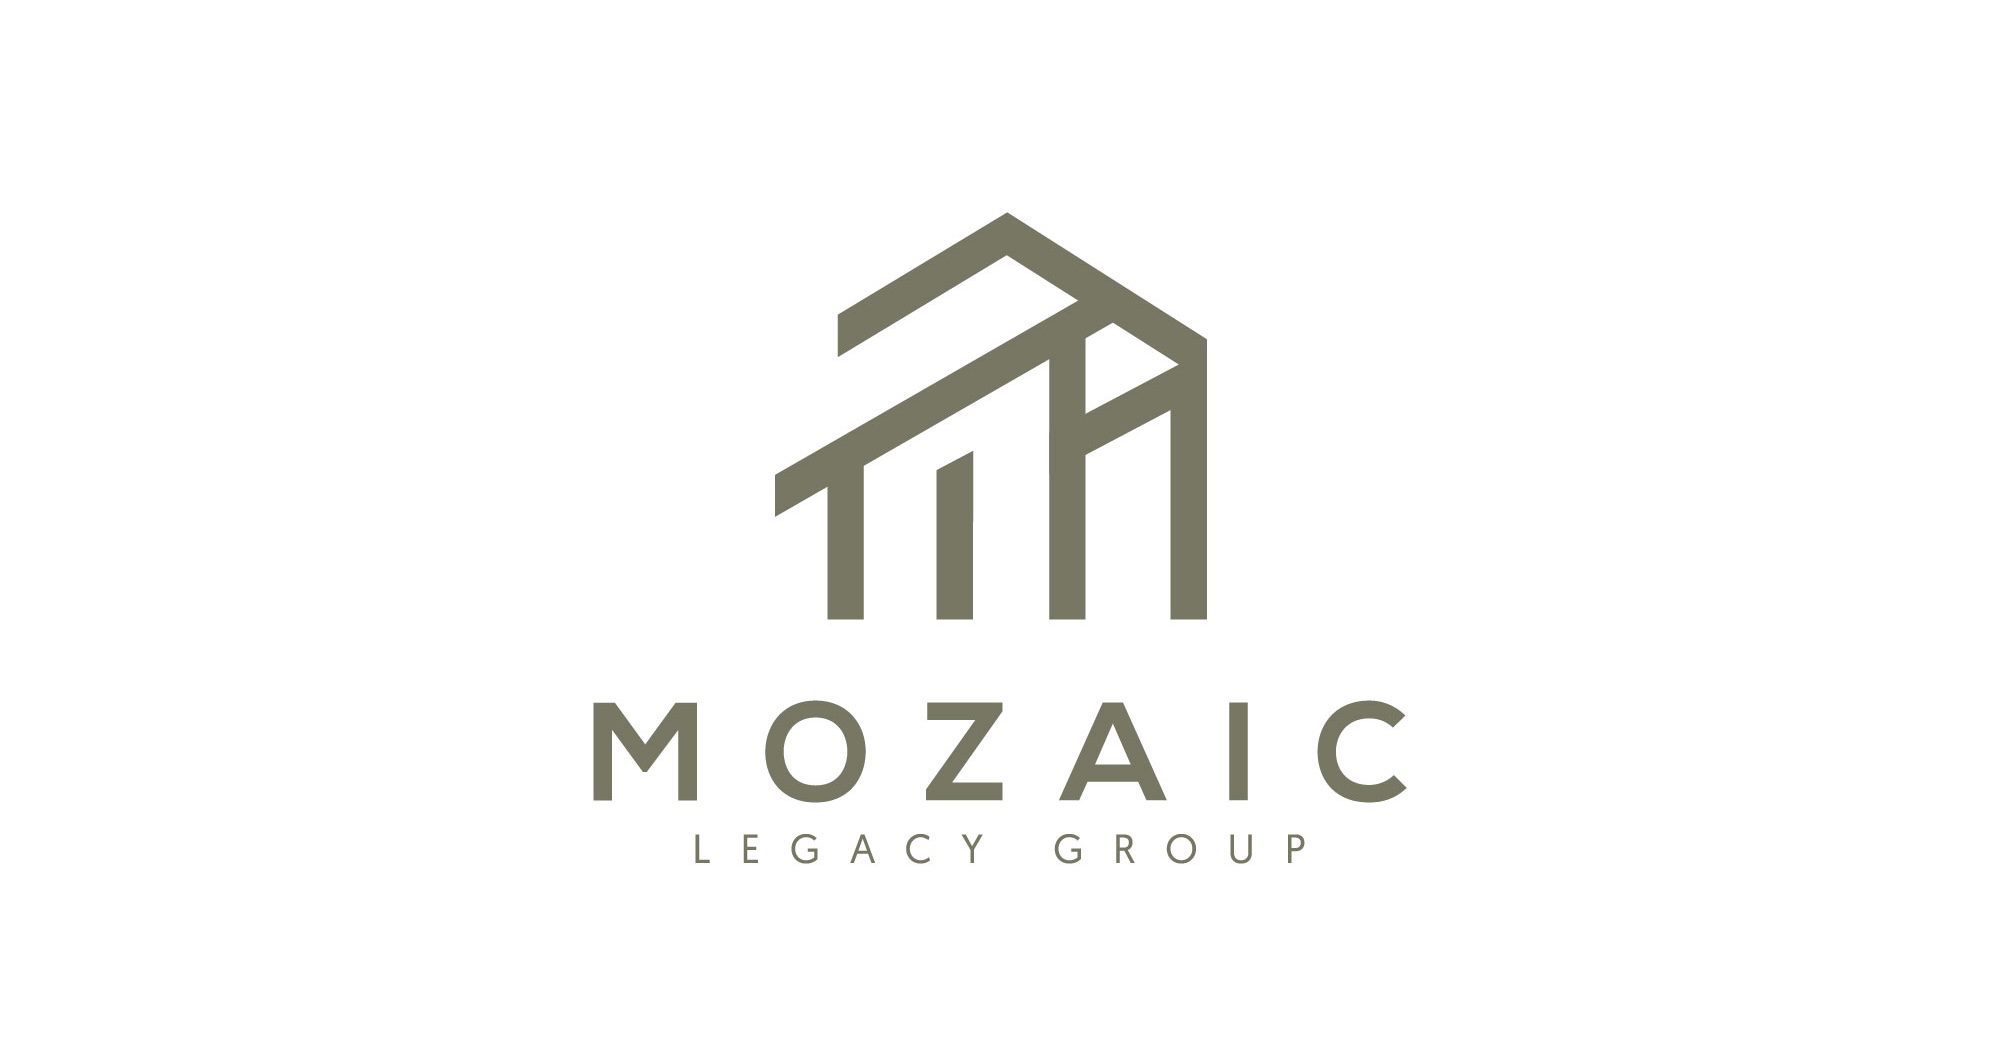 Mozaic Legacy Group